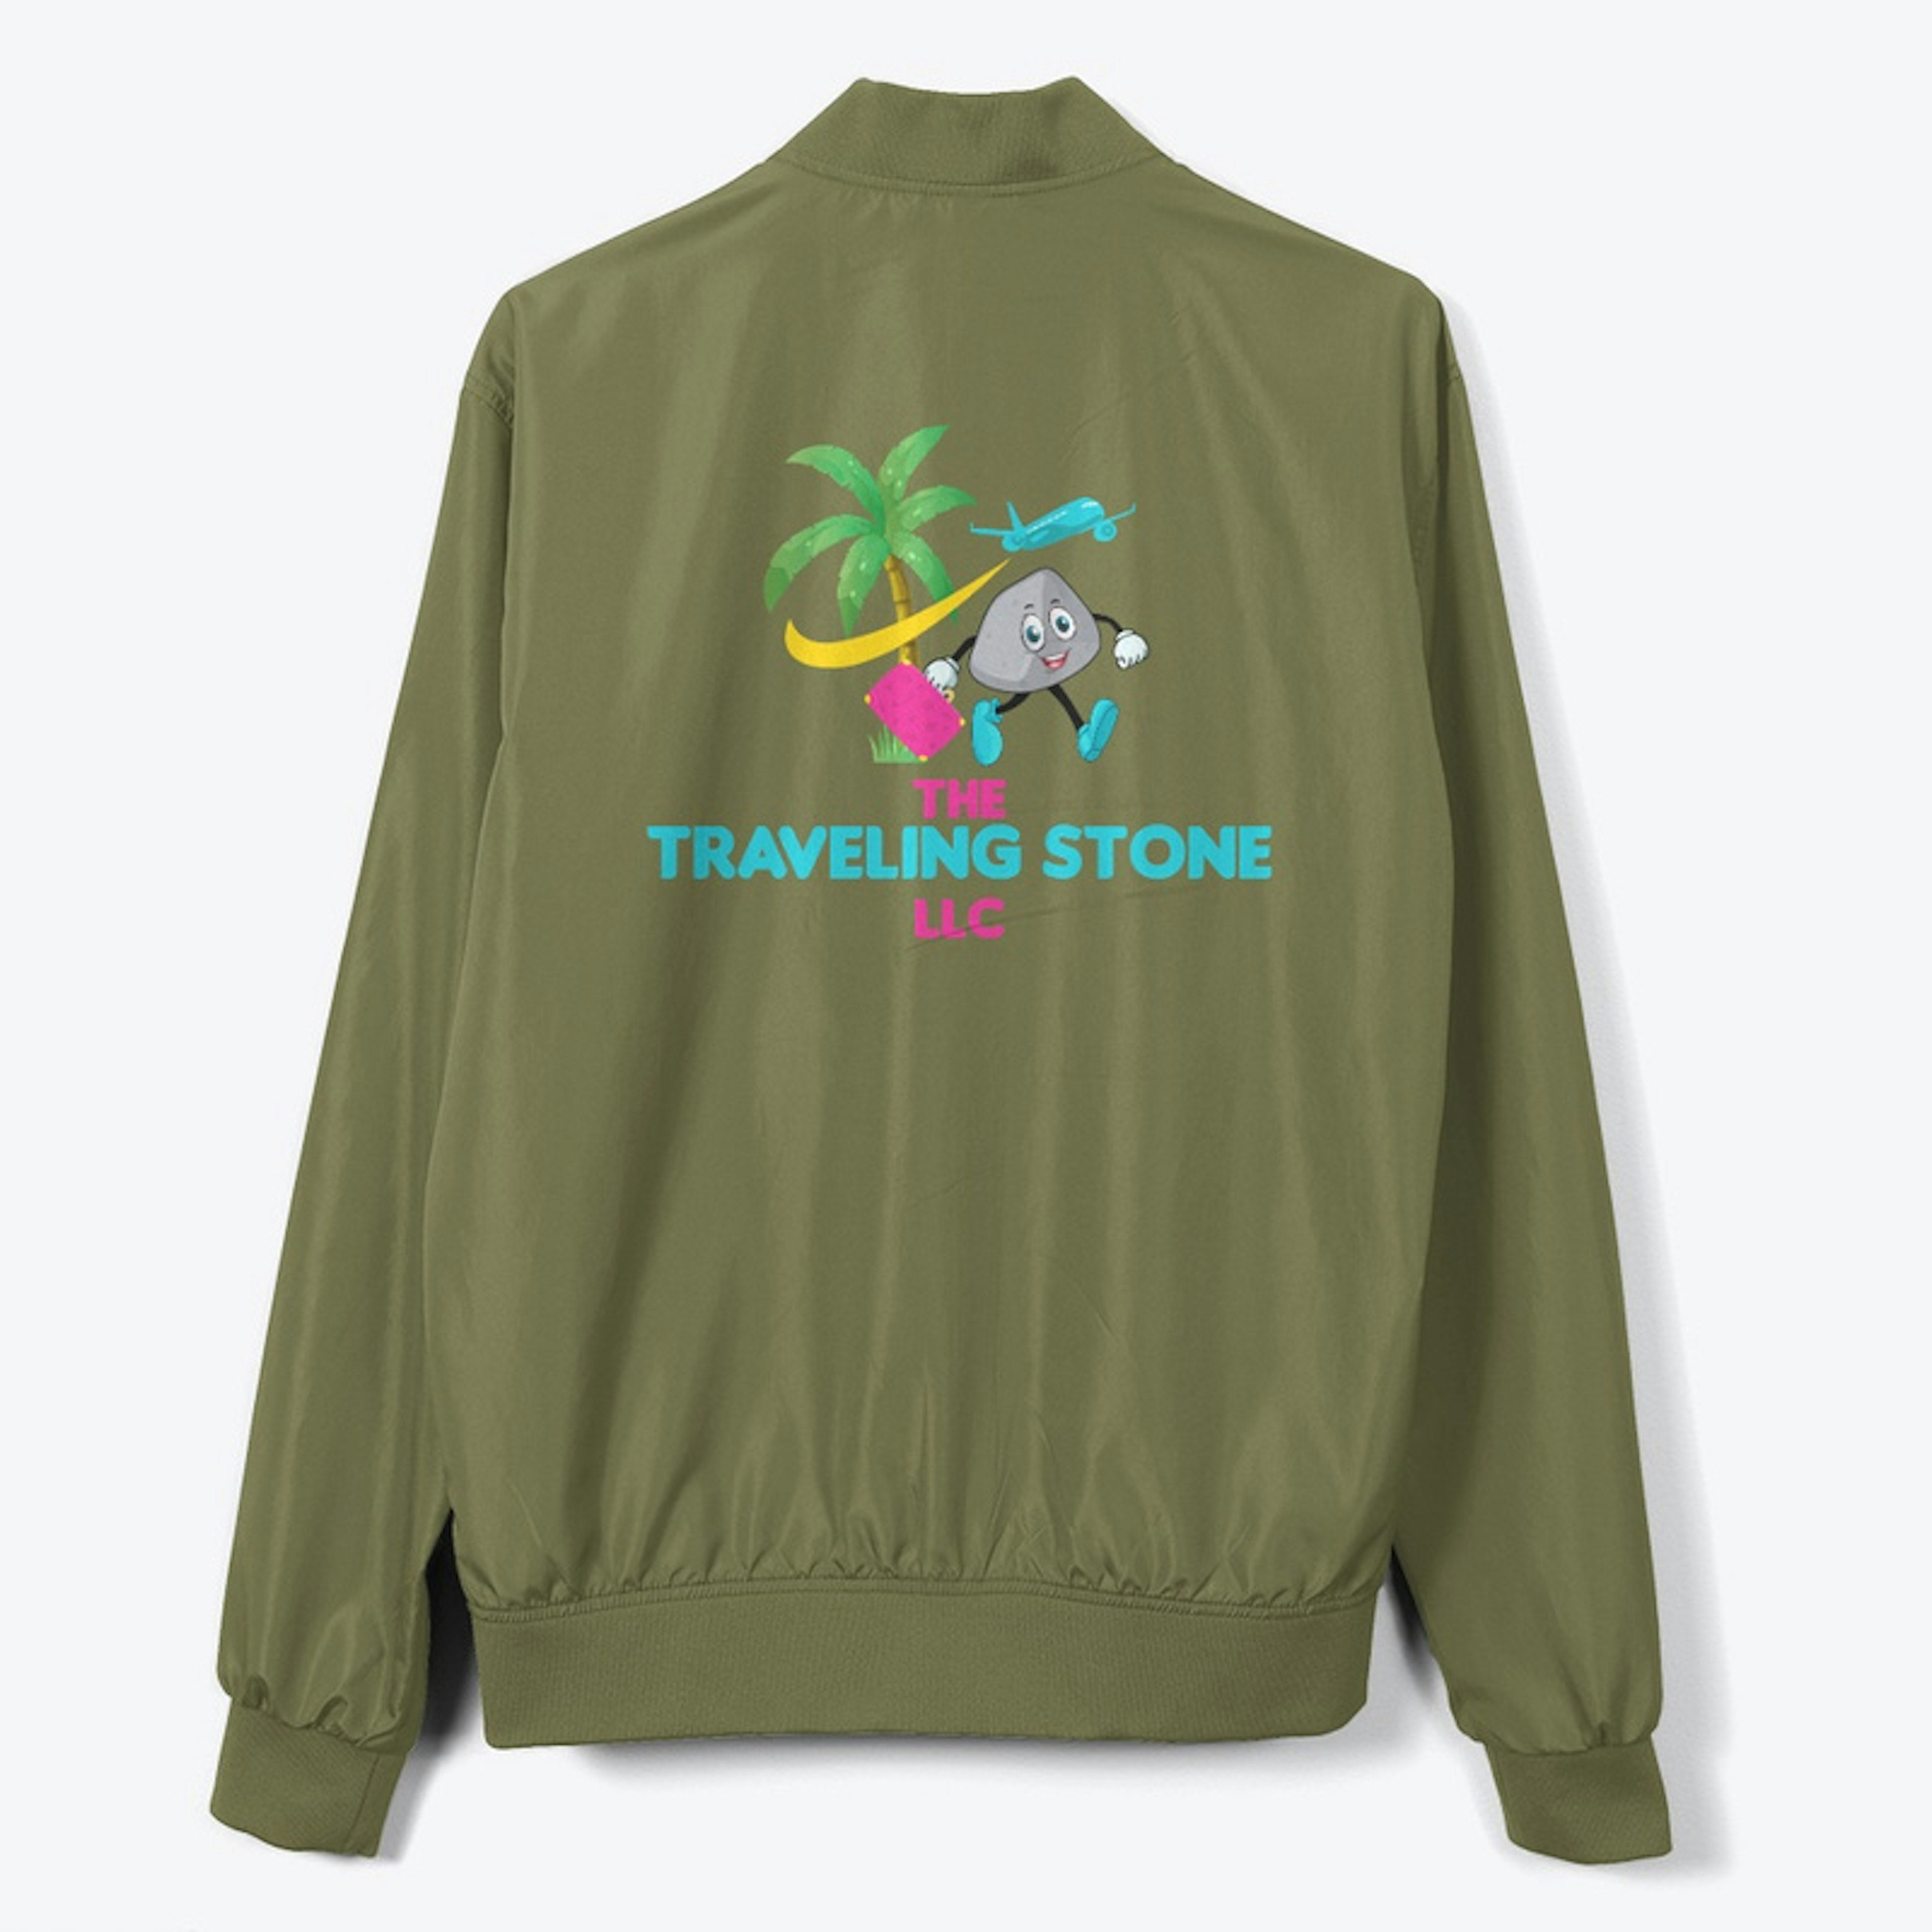 The Traveling Stone LLC